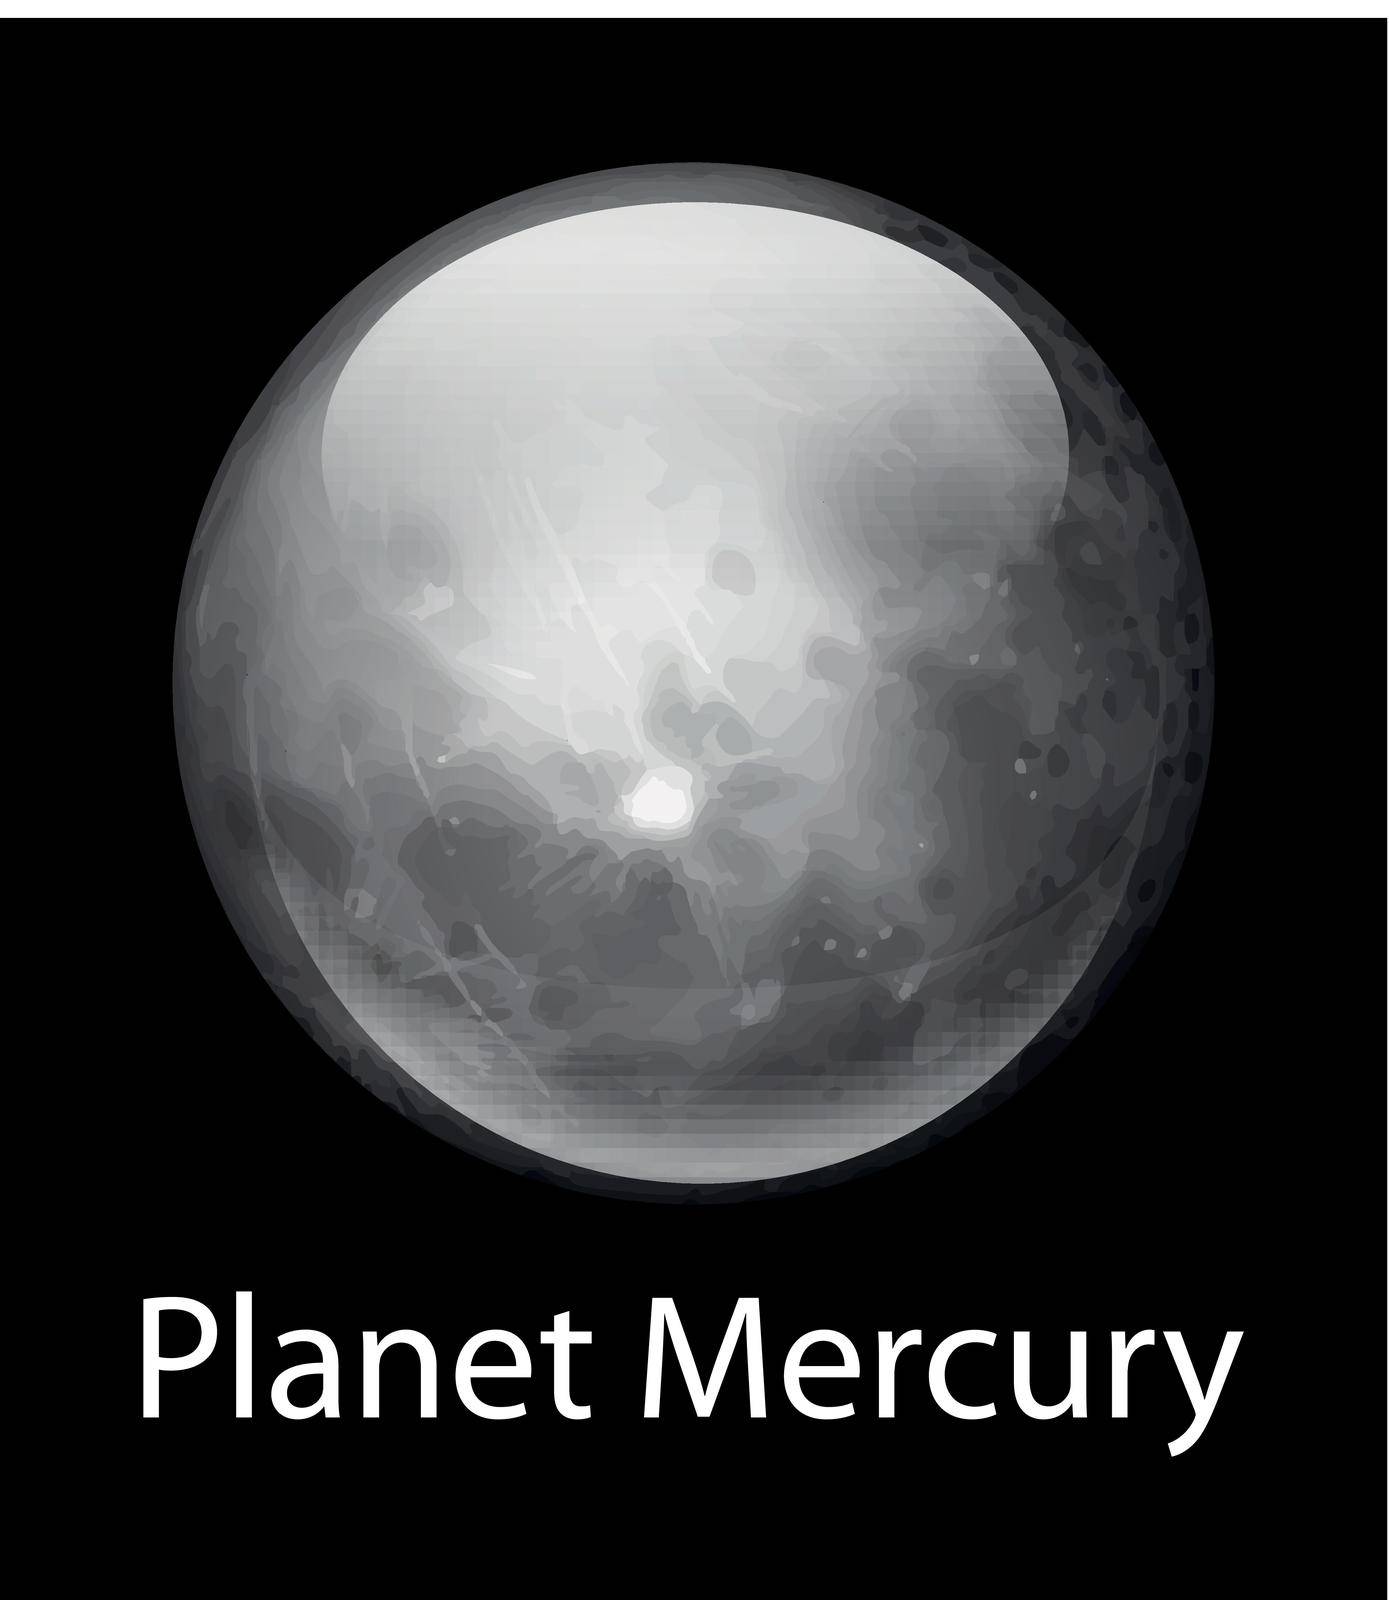 Illustration of the planet Mercury